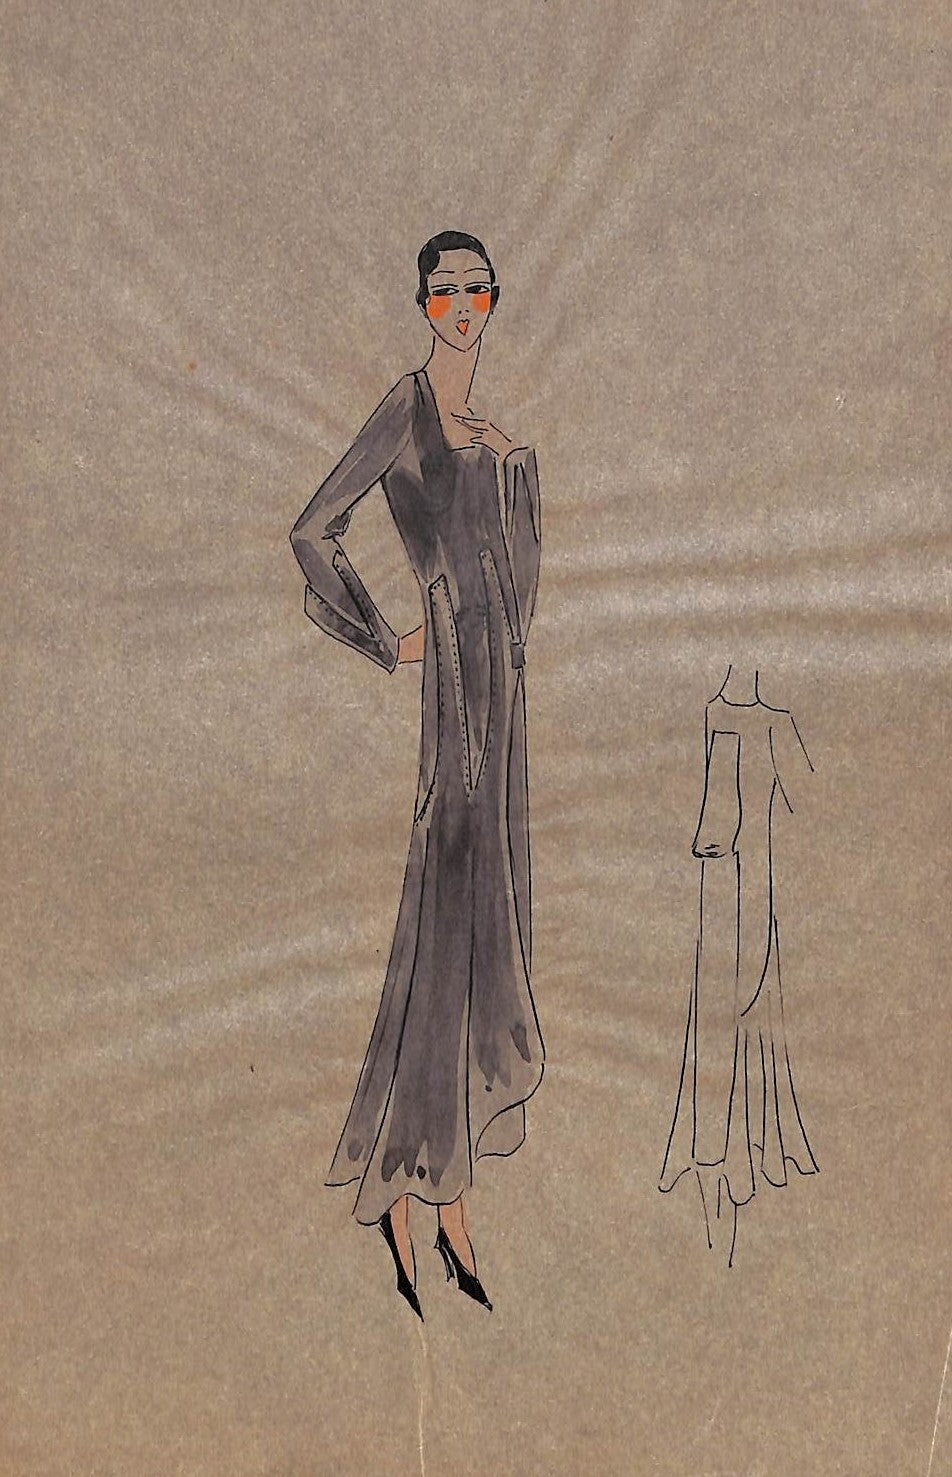 Lanvin of Paris c1920s Original Fashion Illustration in Gouache